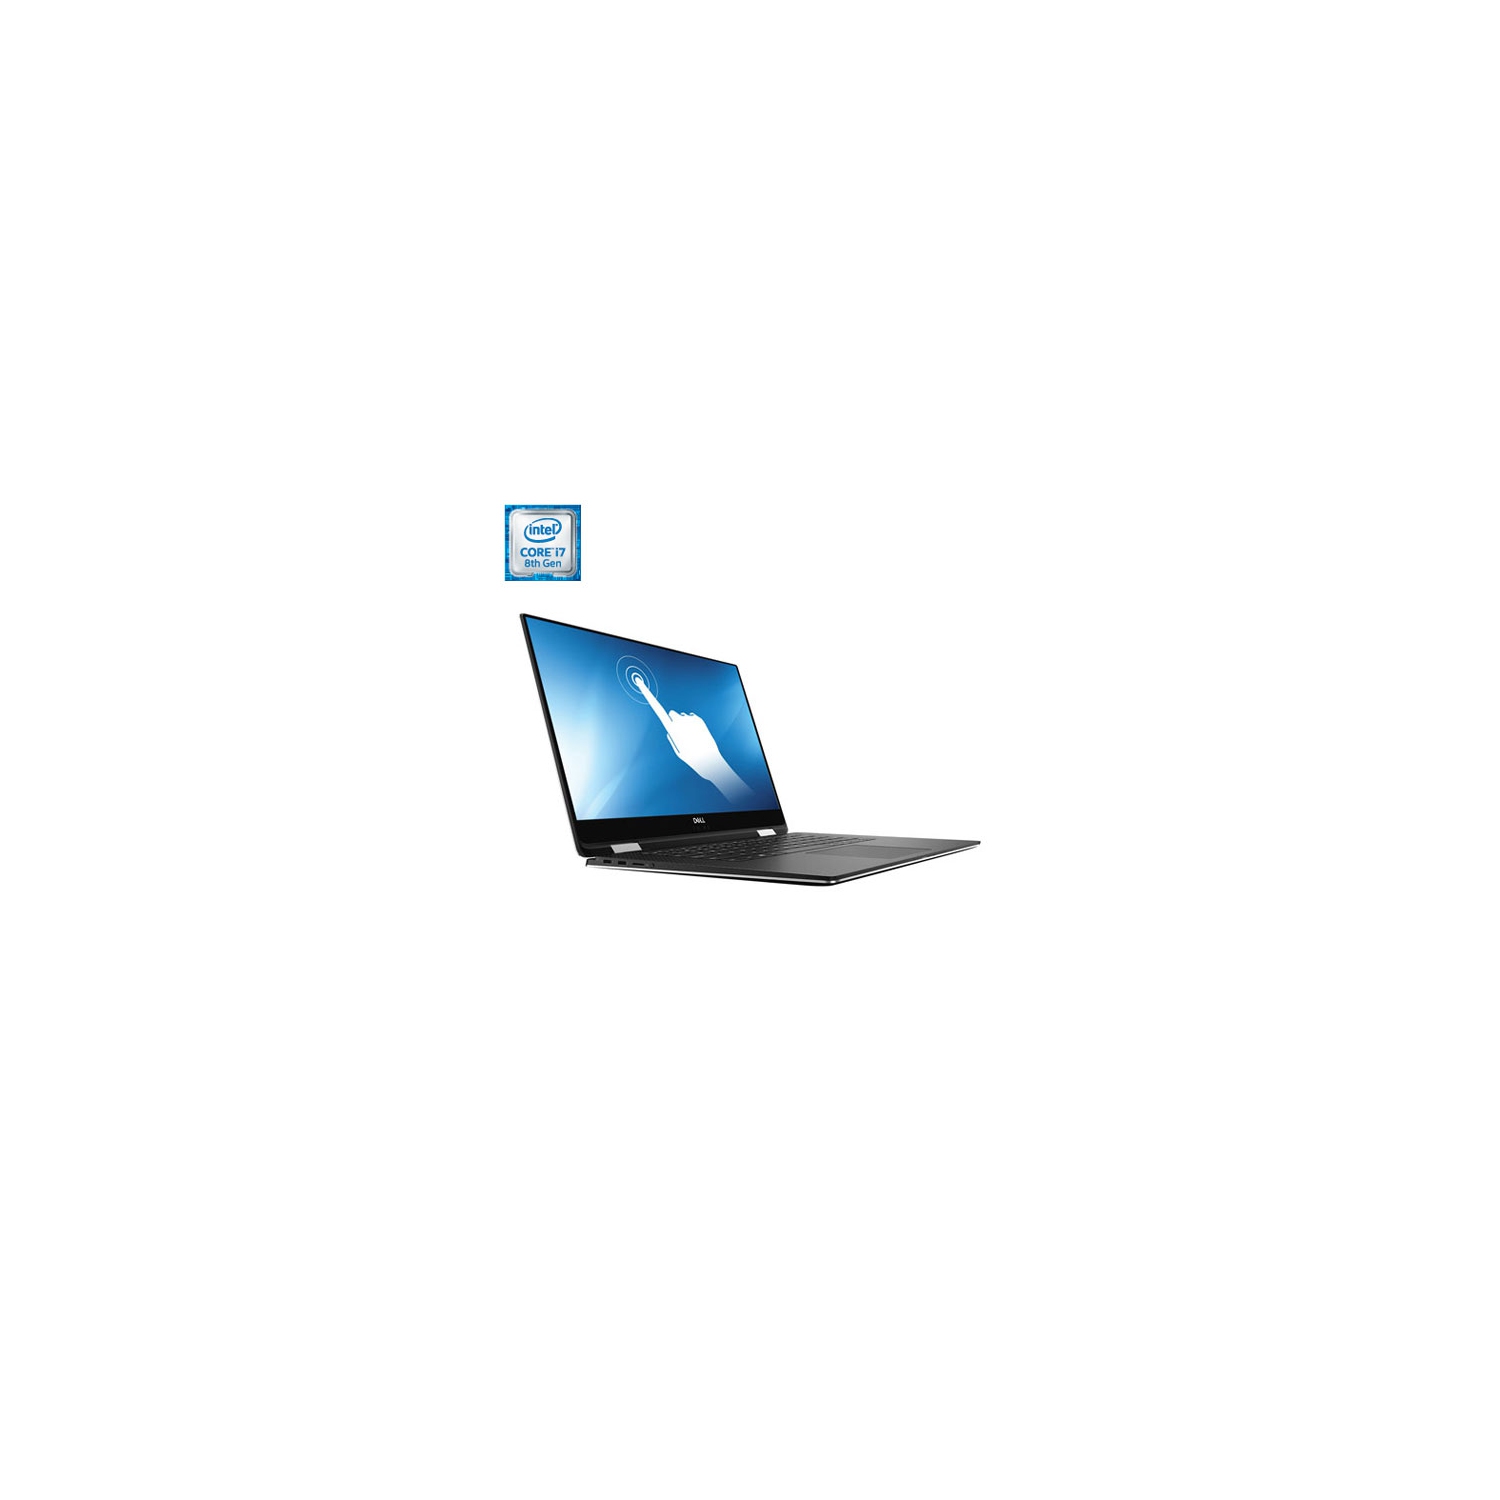 Refurbished (Excellent) -Dell XPS 15.6" Touchscreen 2-in-1 Laptop -Silver (Intel Ci7-8705G/256GB SSD/8GB RAM/Win 10) -En